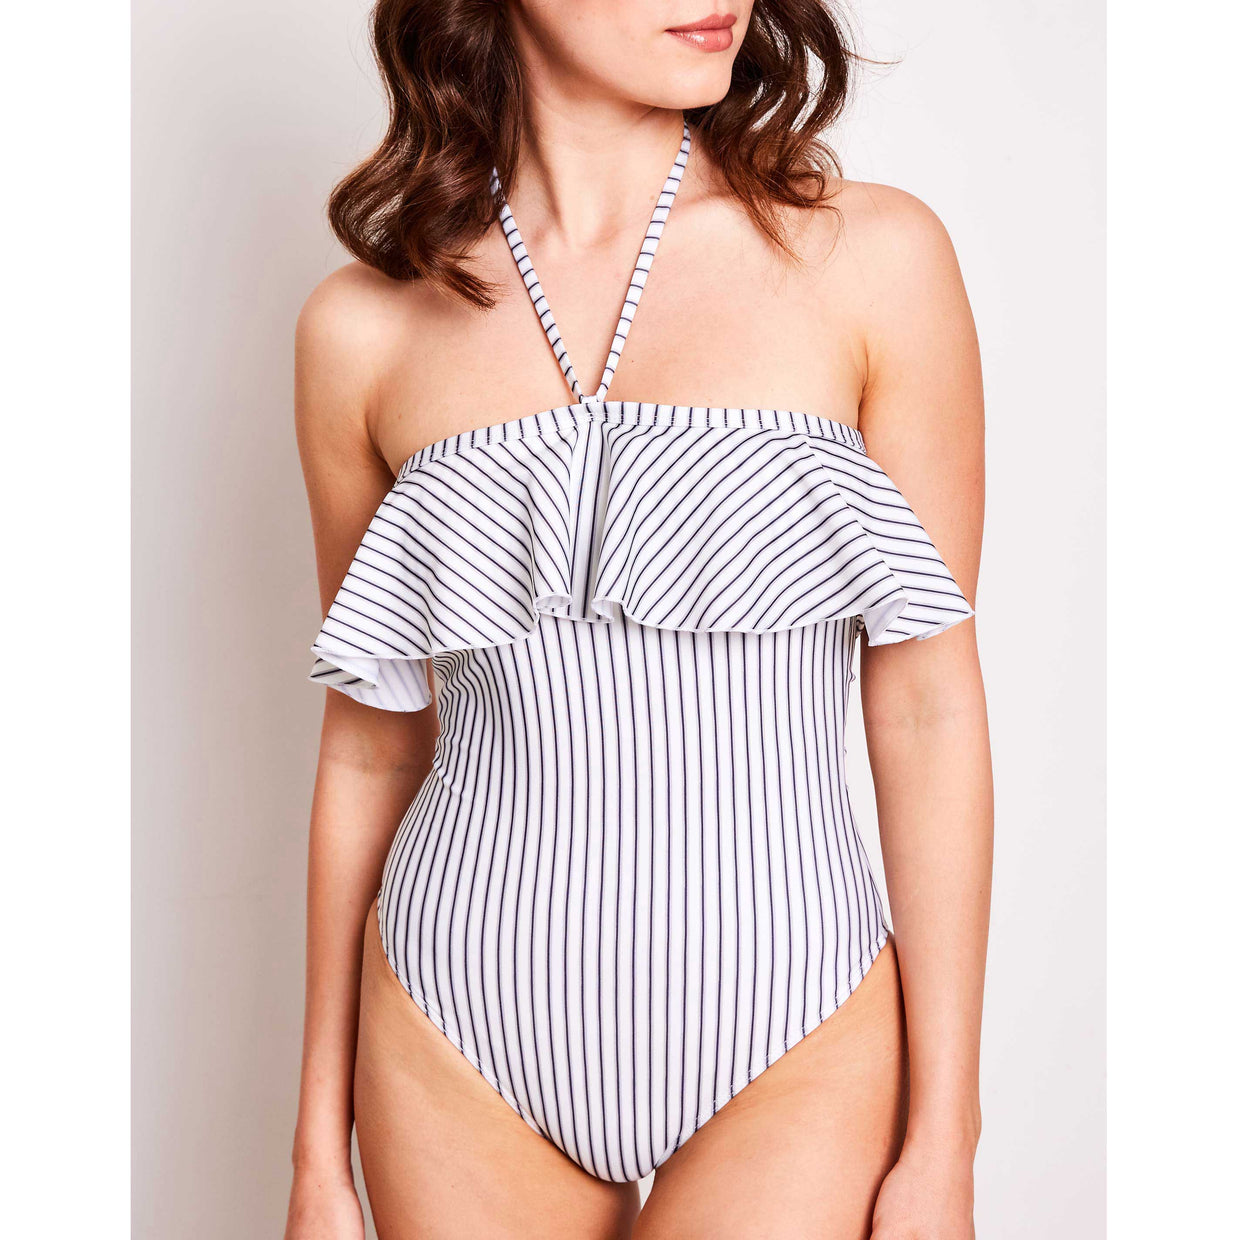 Olivia-one-piece-pinstripes-5-contessa-volpi-summer-swimwear-collection